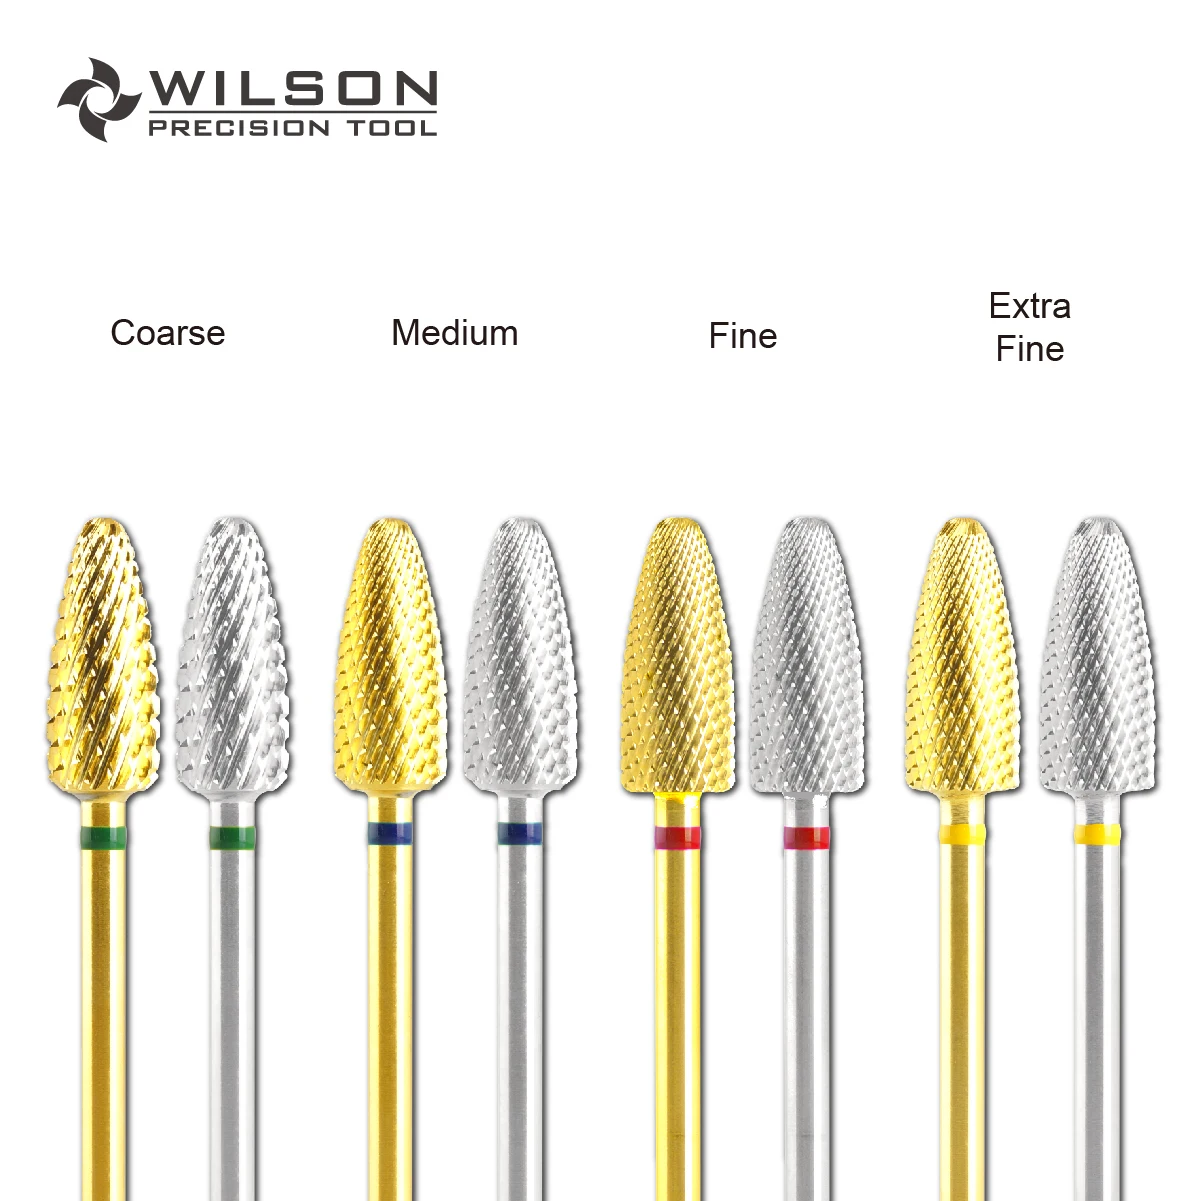 Upgrade Flame Bits - Gold/Silver - WILSON Carbide Nail Drill Bit